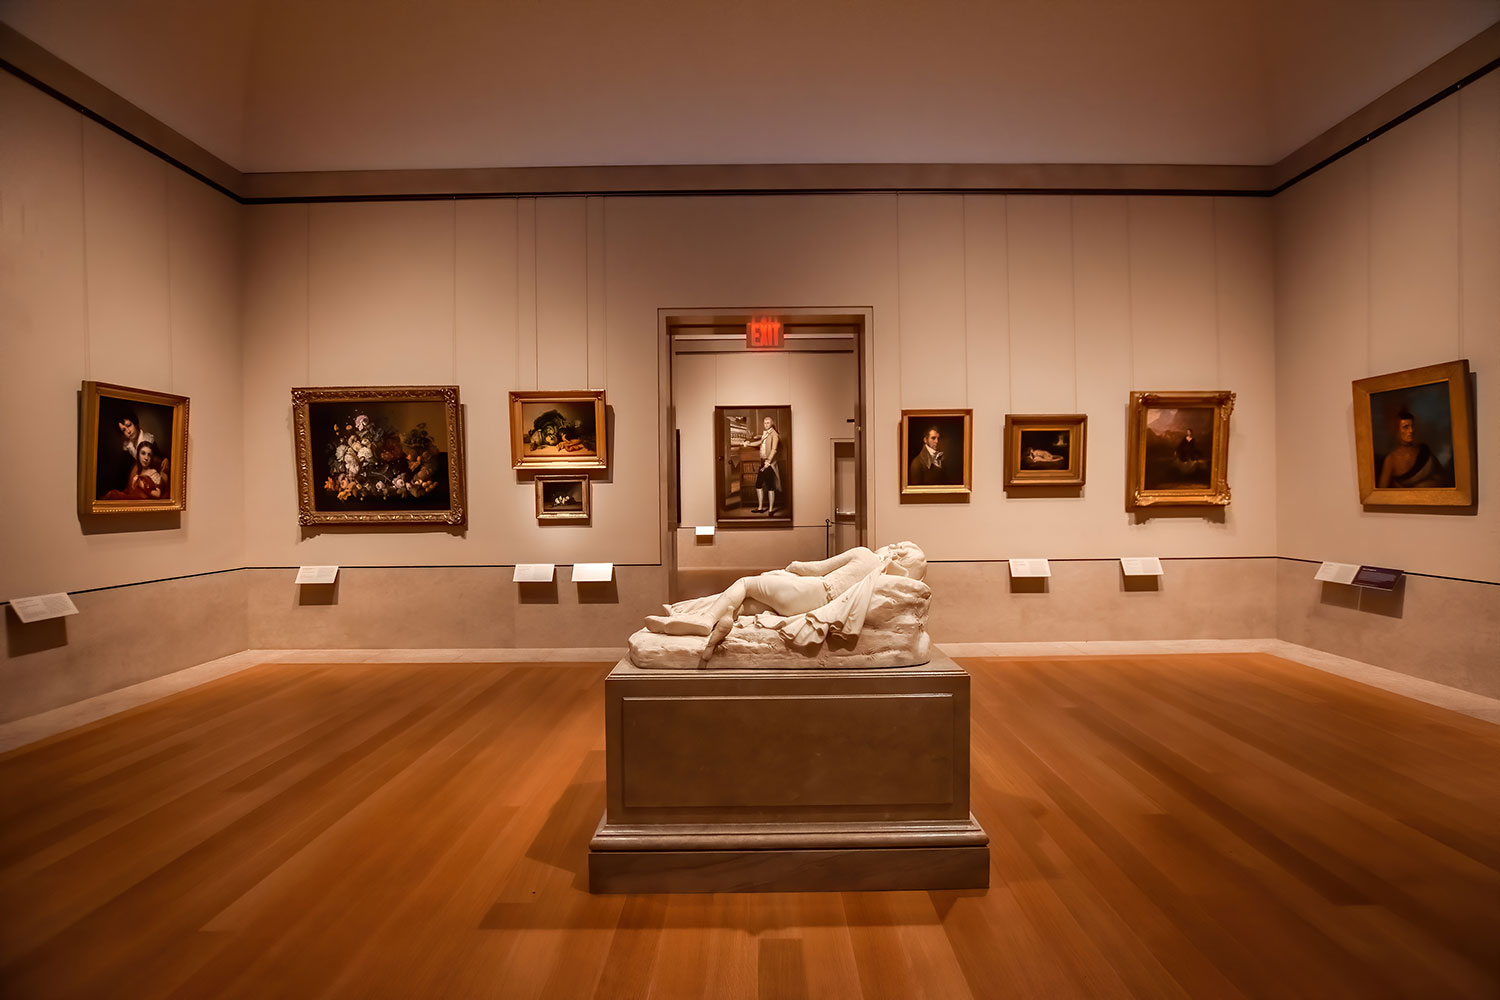 Inside the Met in New York